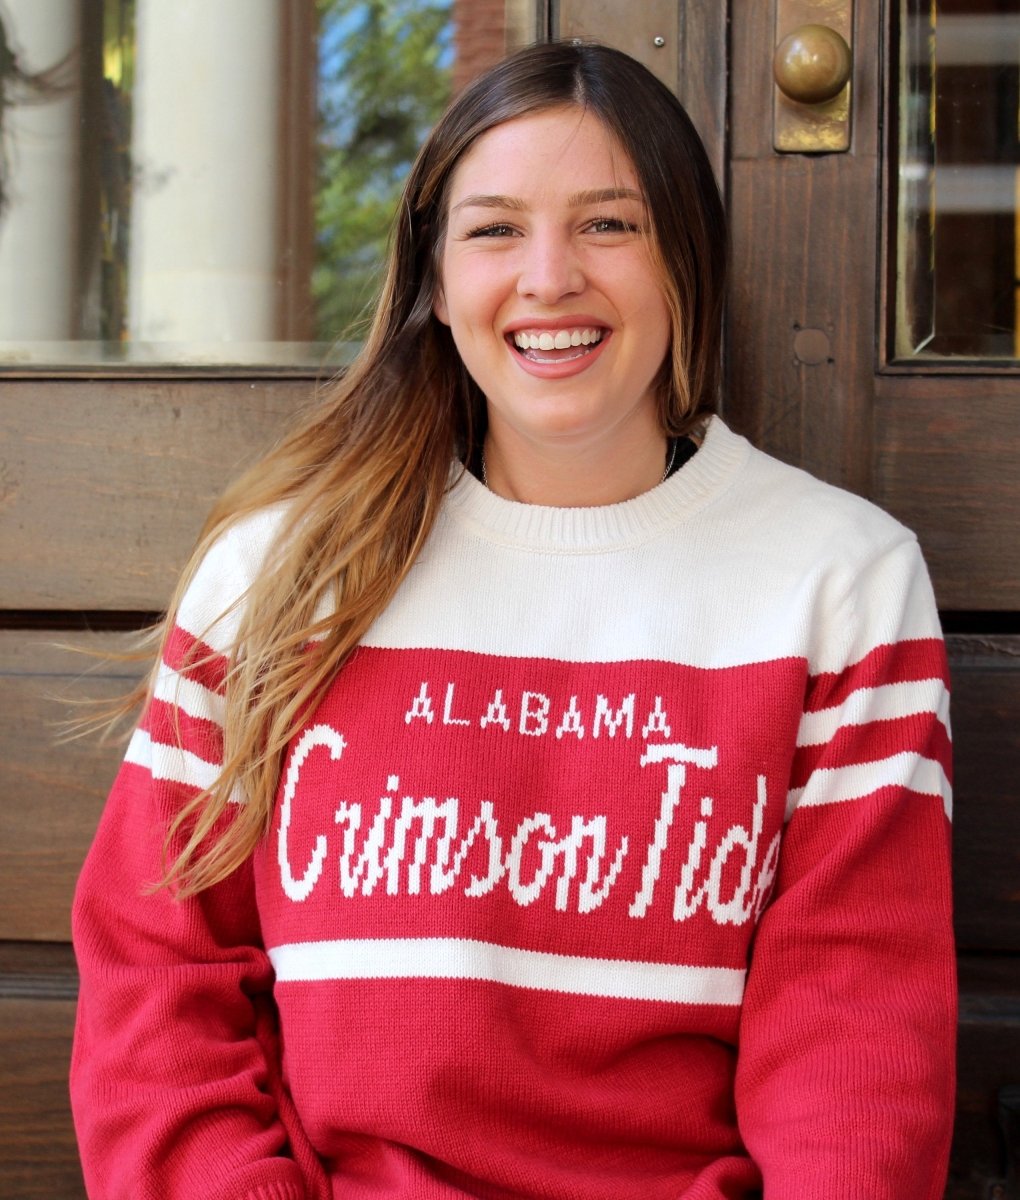 Alabama Crimson Tide Stripe Hillflint Sweater - Shop B-Unlimited